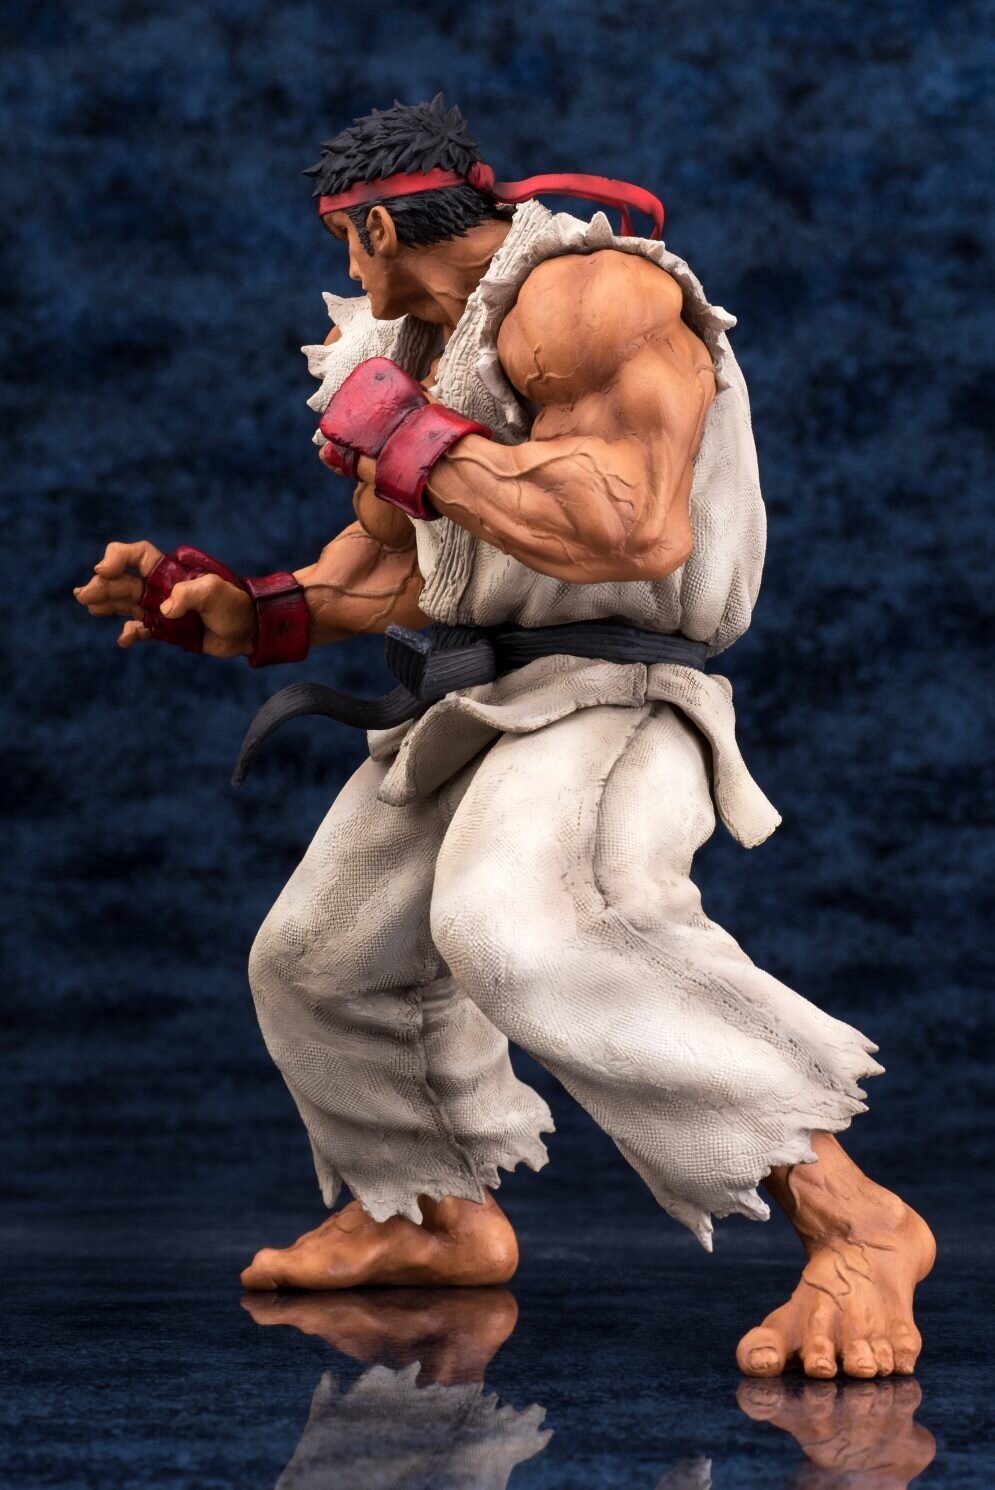 Street Fighter III 3rd Strike Ryu 1:8 Scale Statue